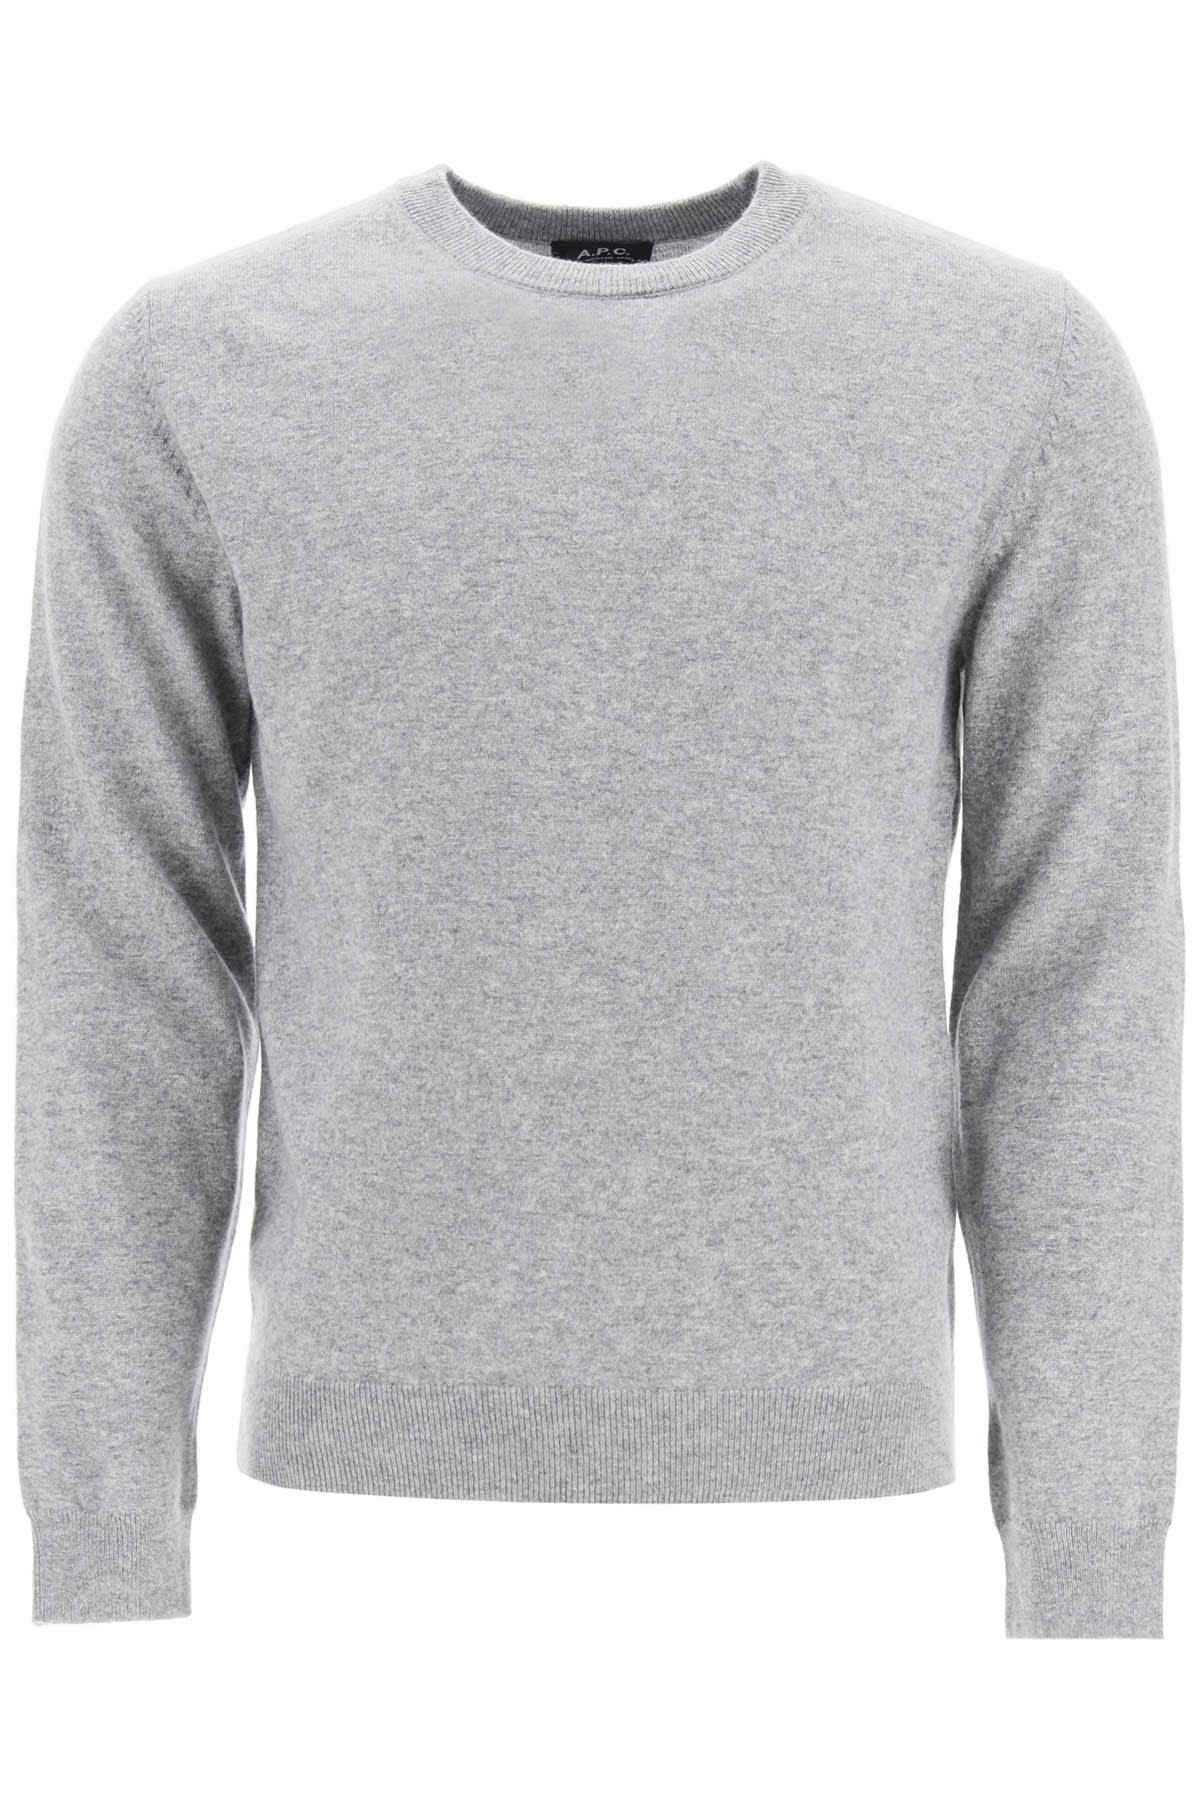 A.P.C. Cashmere Sweater